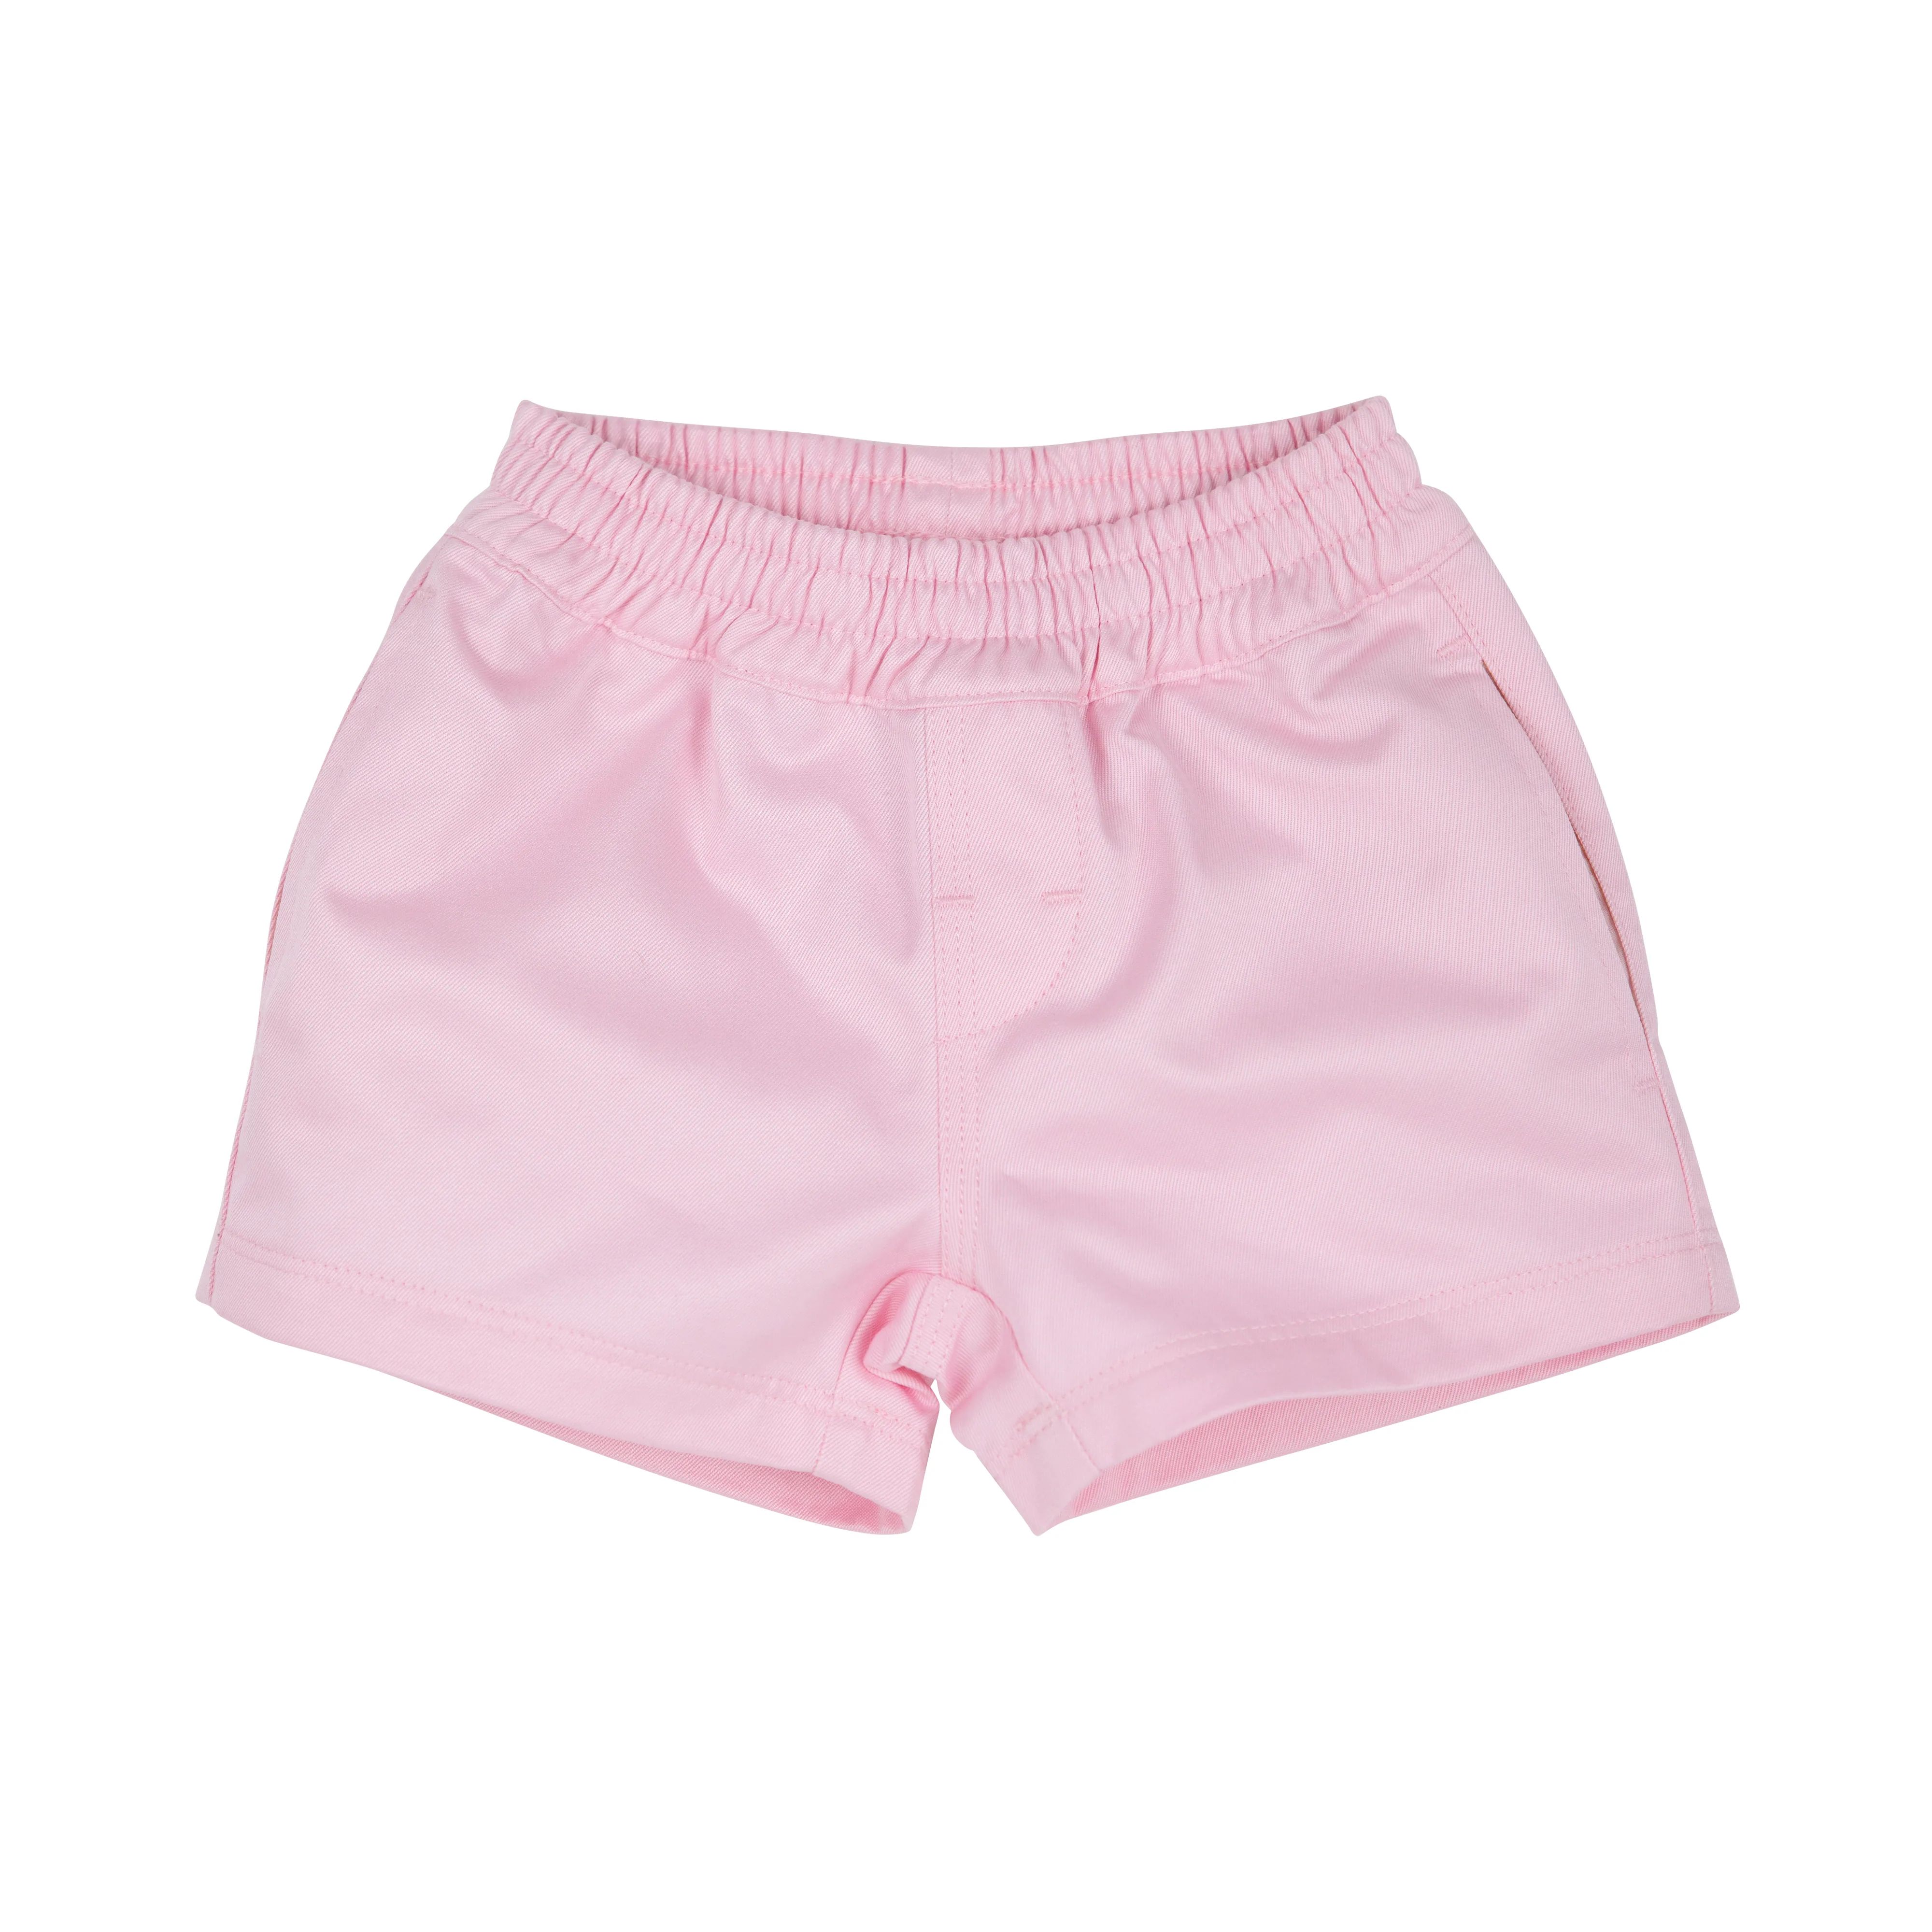 Sheffield Shorts - Palm Beach Pink with Mandeville Mint Stork | The Beaufort Bonnet Company